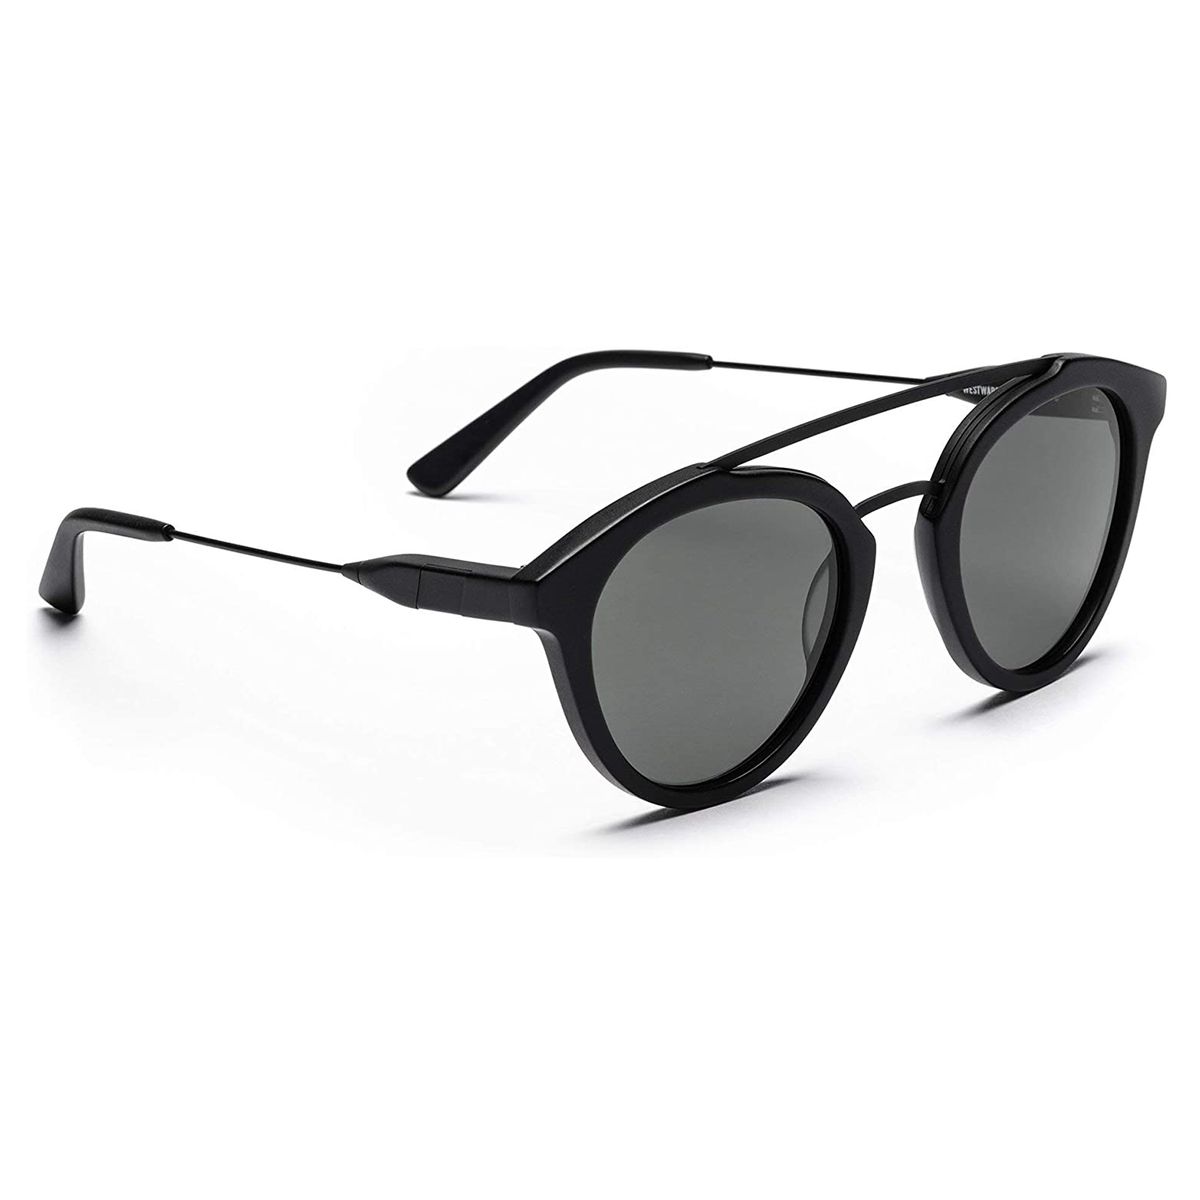 Sunglasses by Westward Leaning